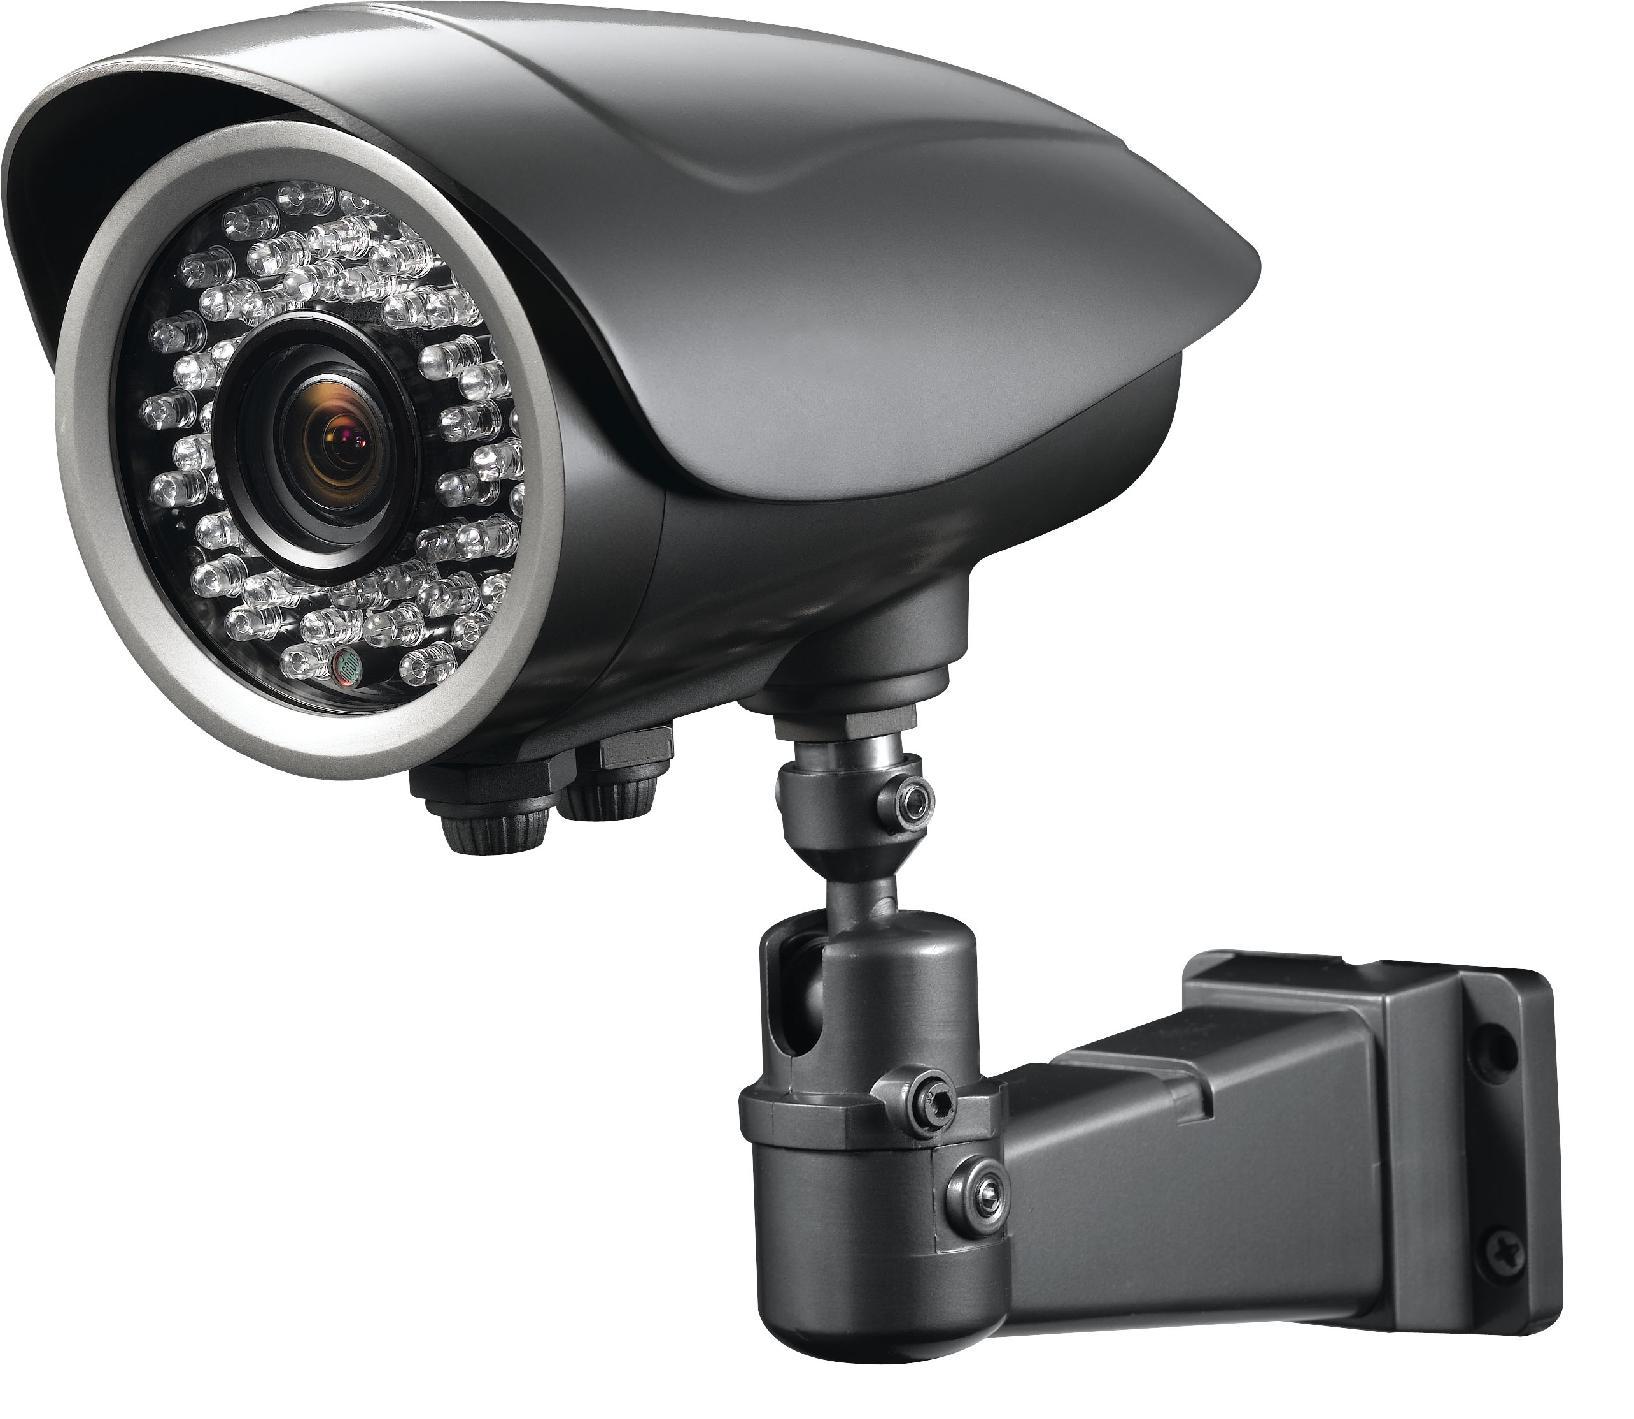 Цветная камера. Камера видеонаблюдения CCTV. Камера телевизионная vc1280n. Камера видеонаблюдения Sony ENC. H3508c камера видеонаблюдения.